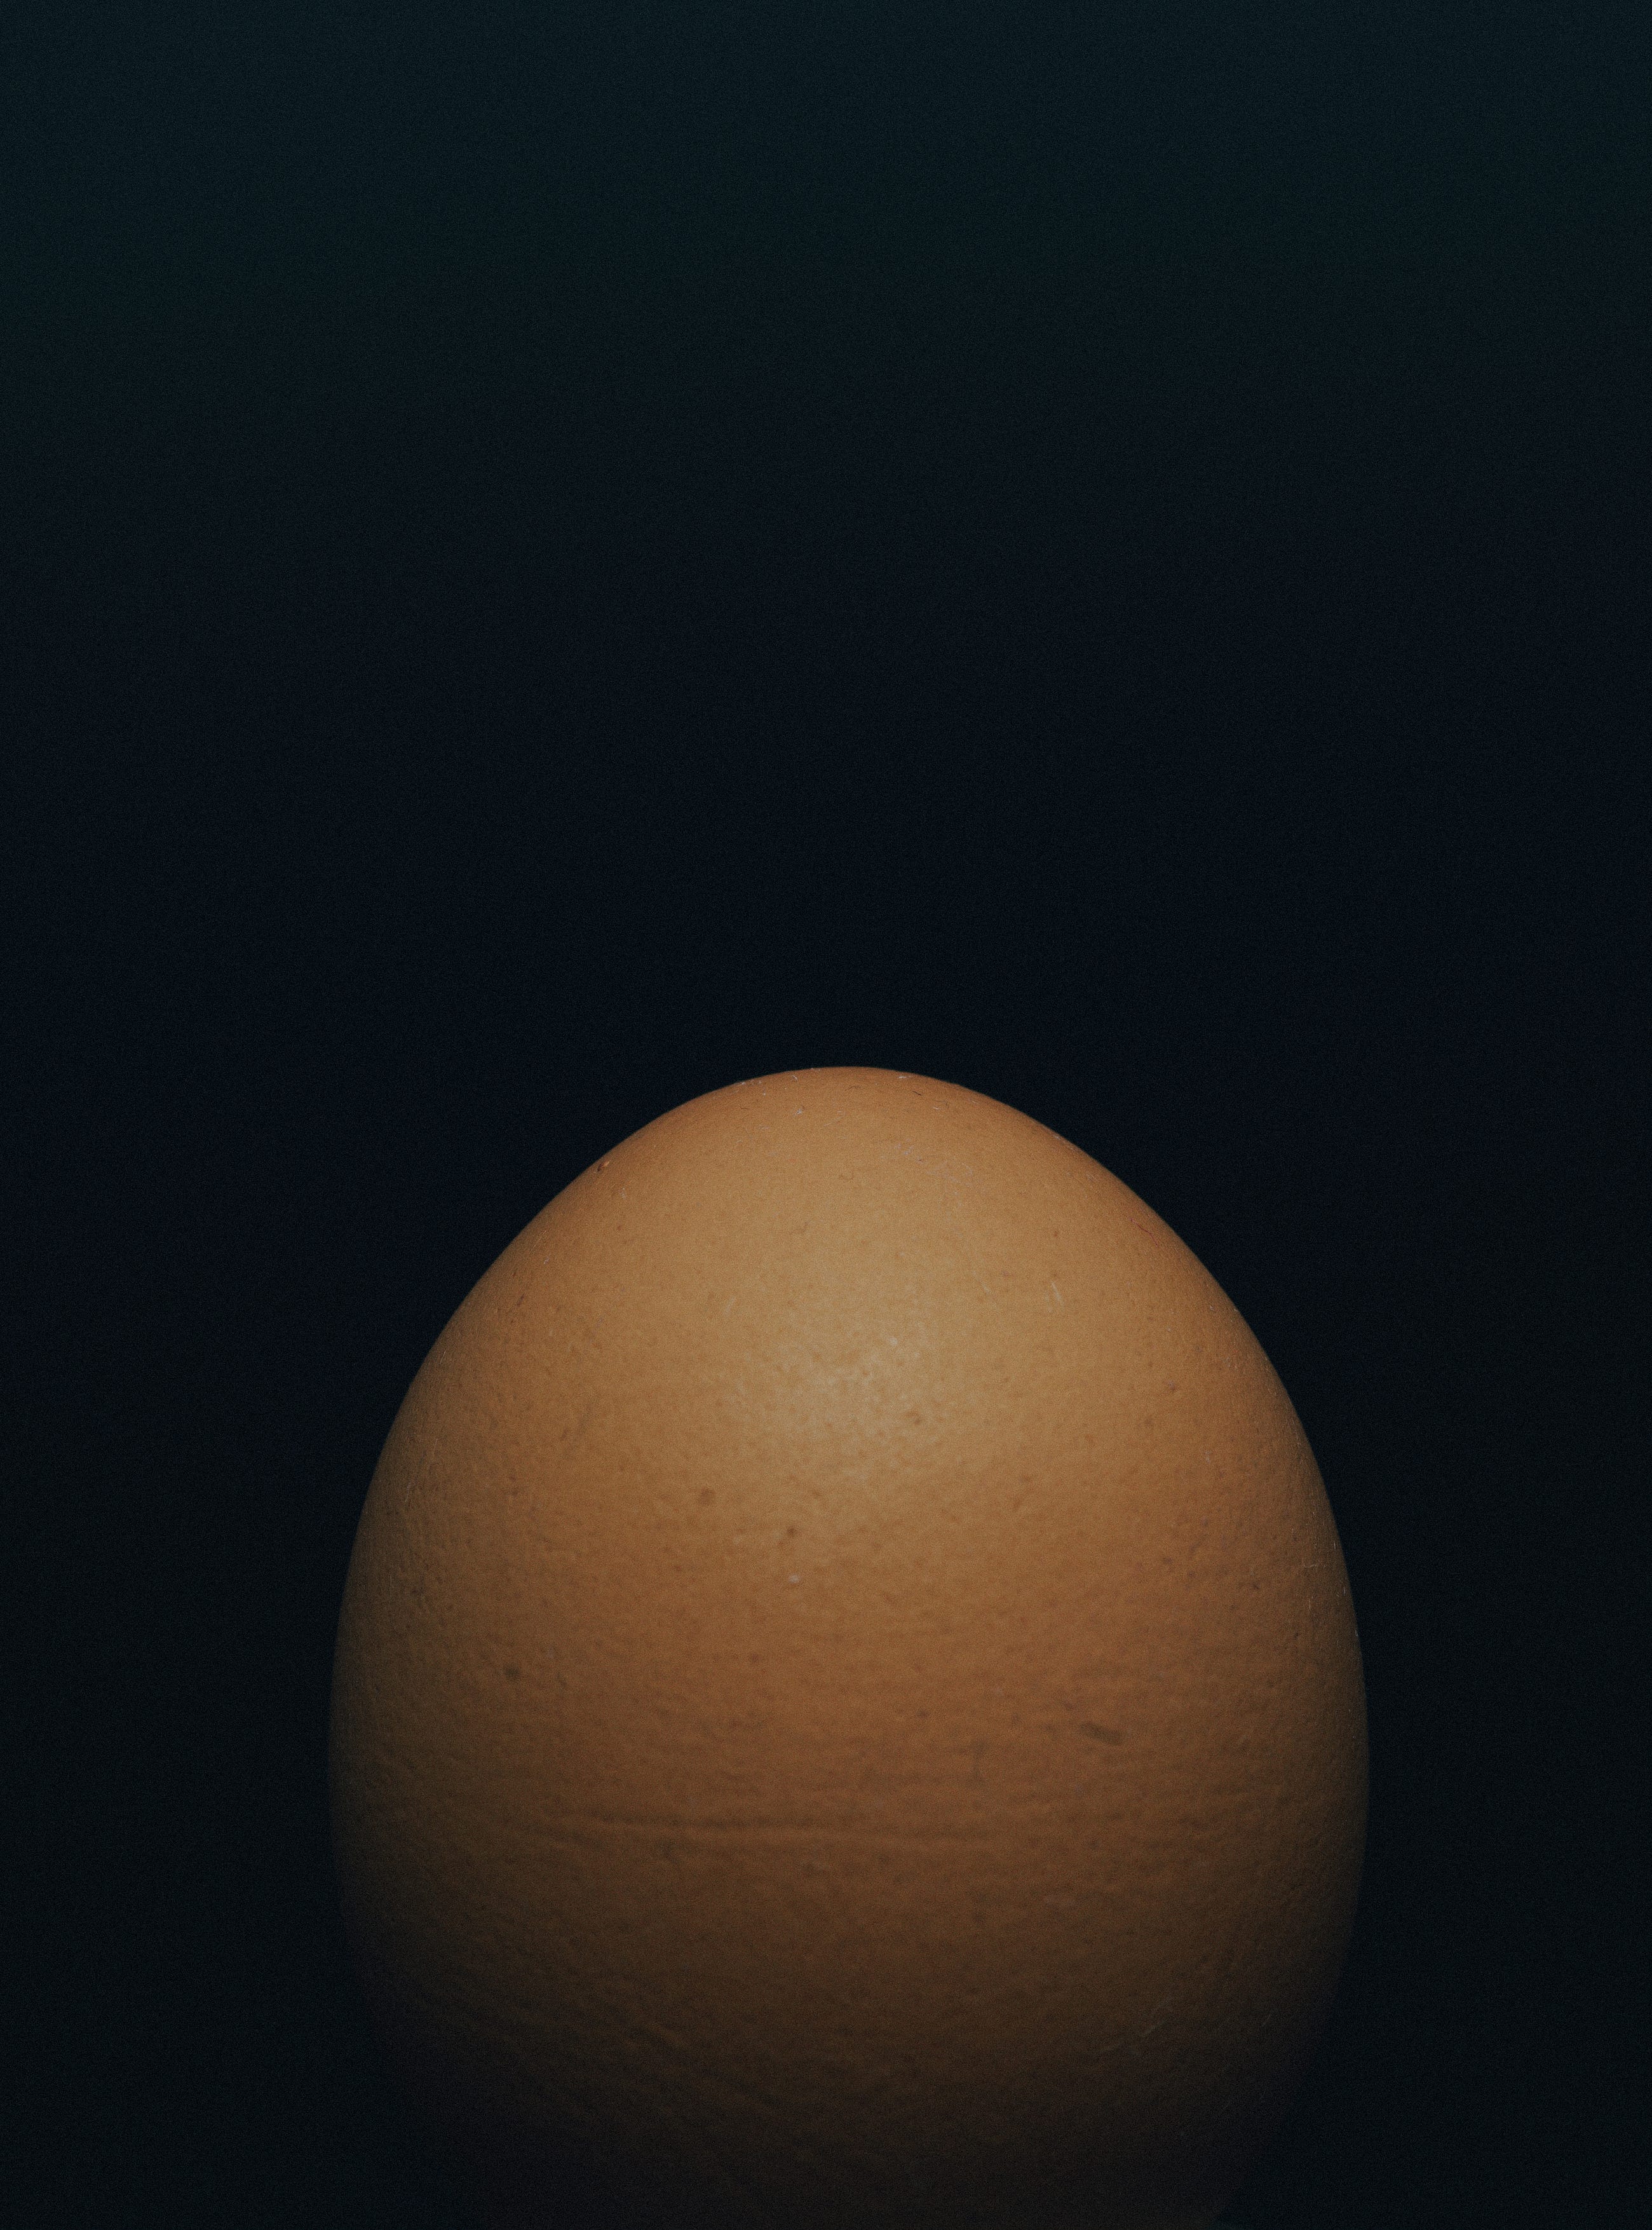 How an egg photo got 54M+ likes